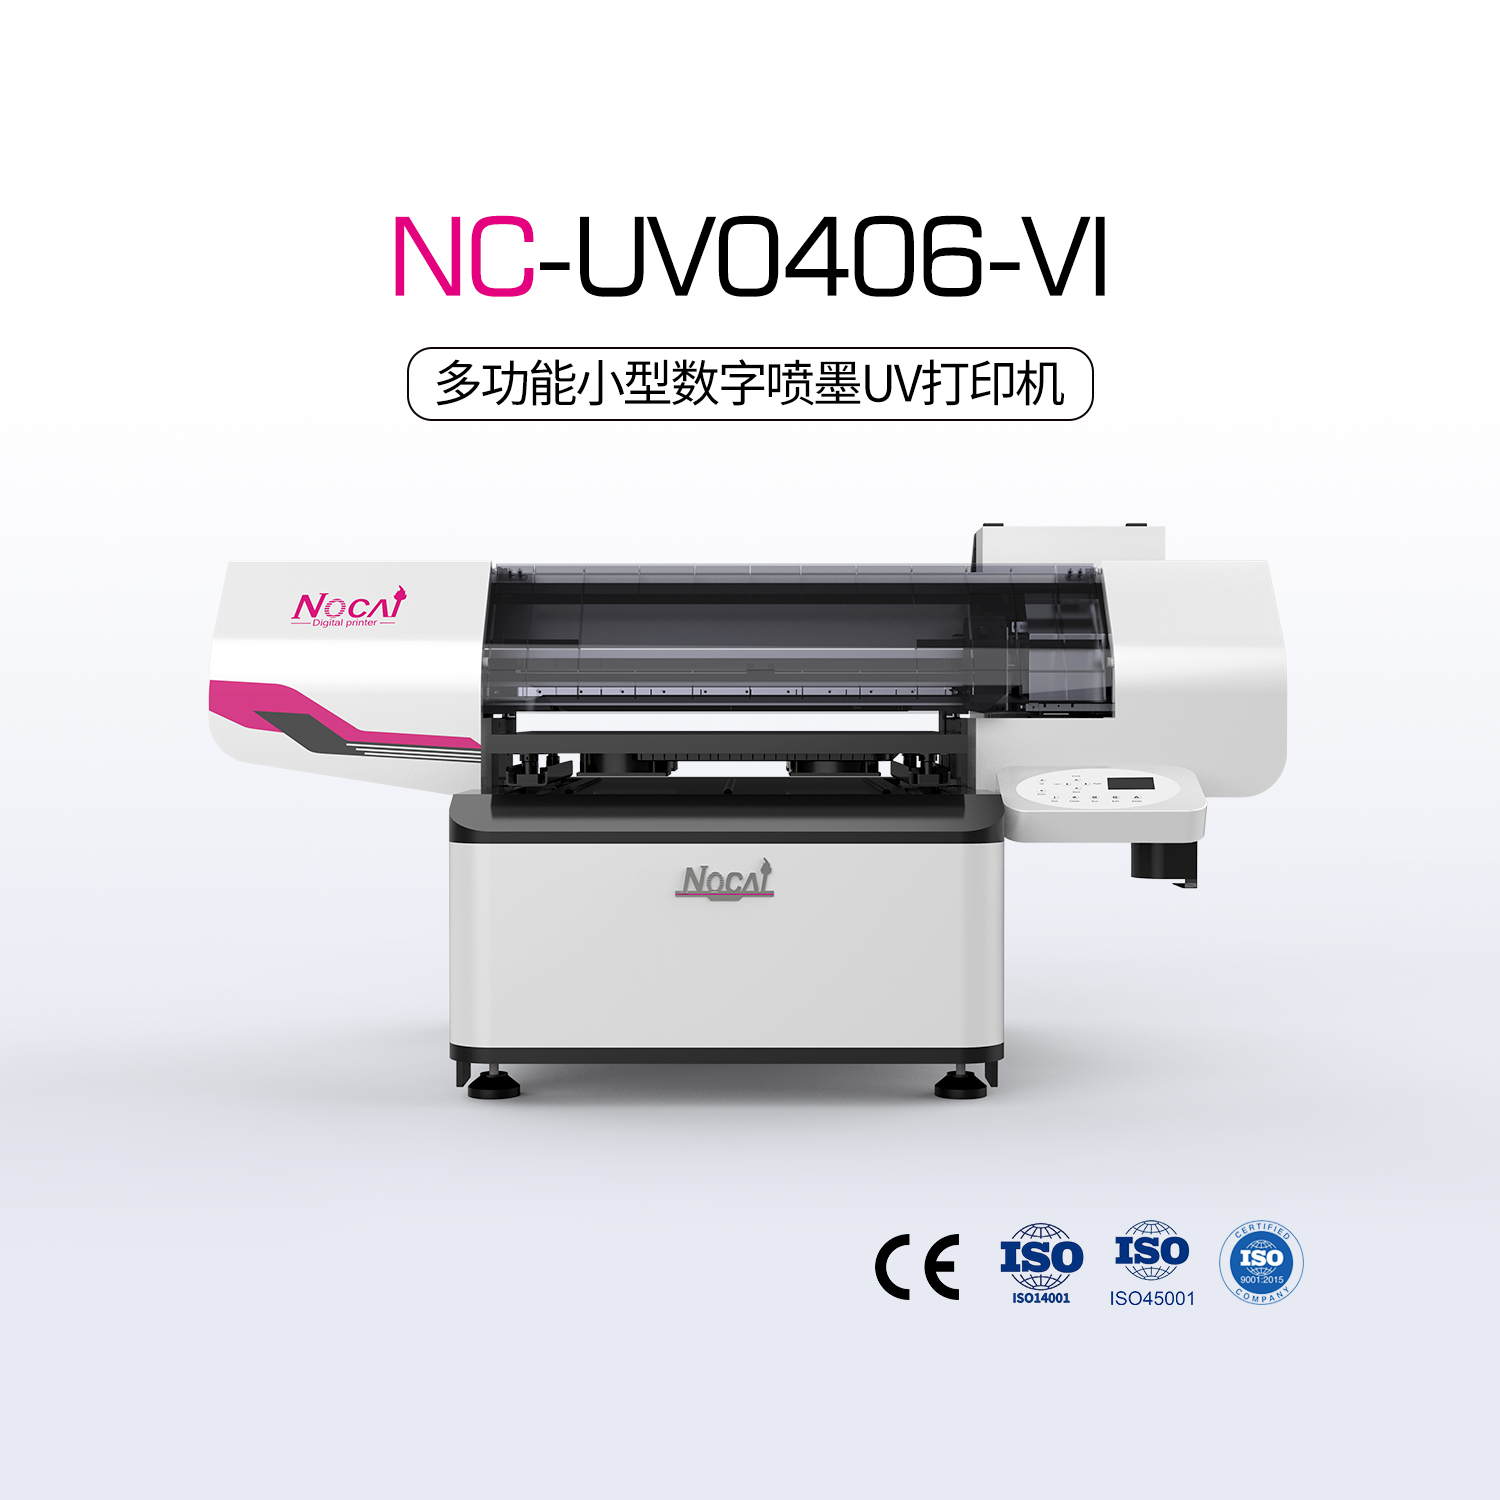 NC-UV0406-VI